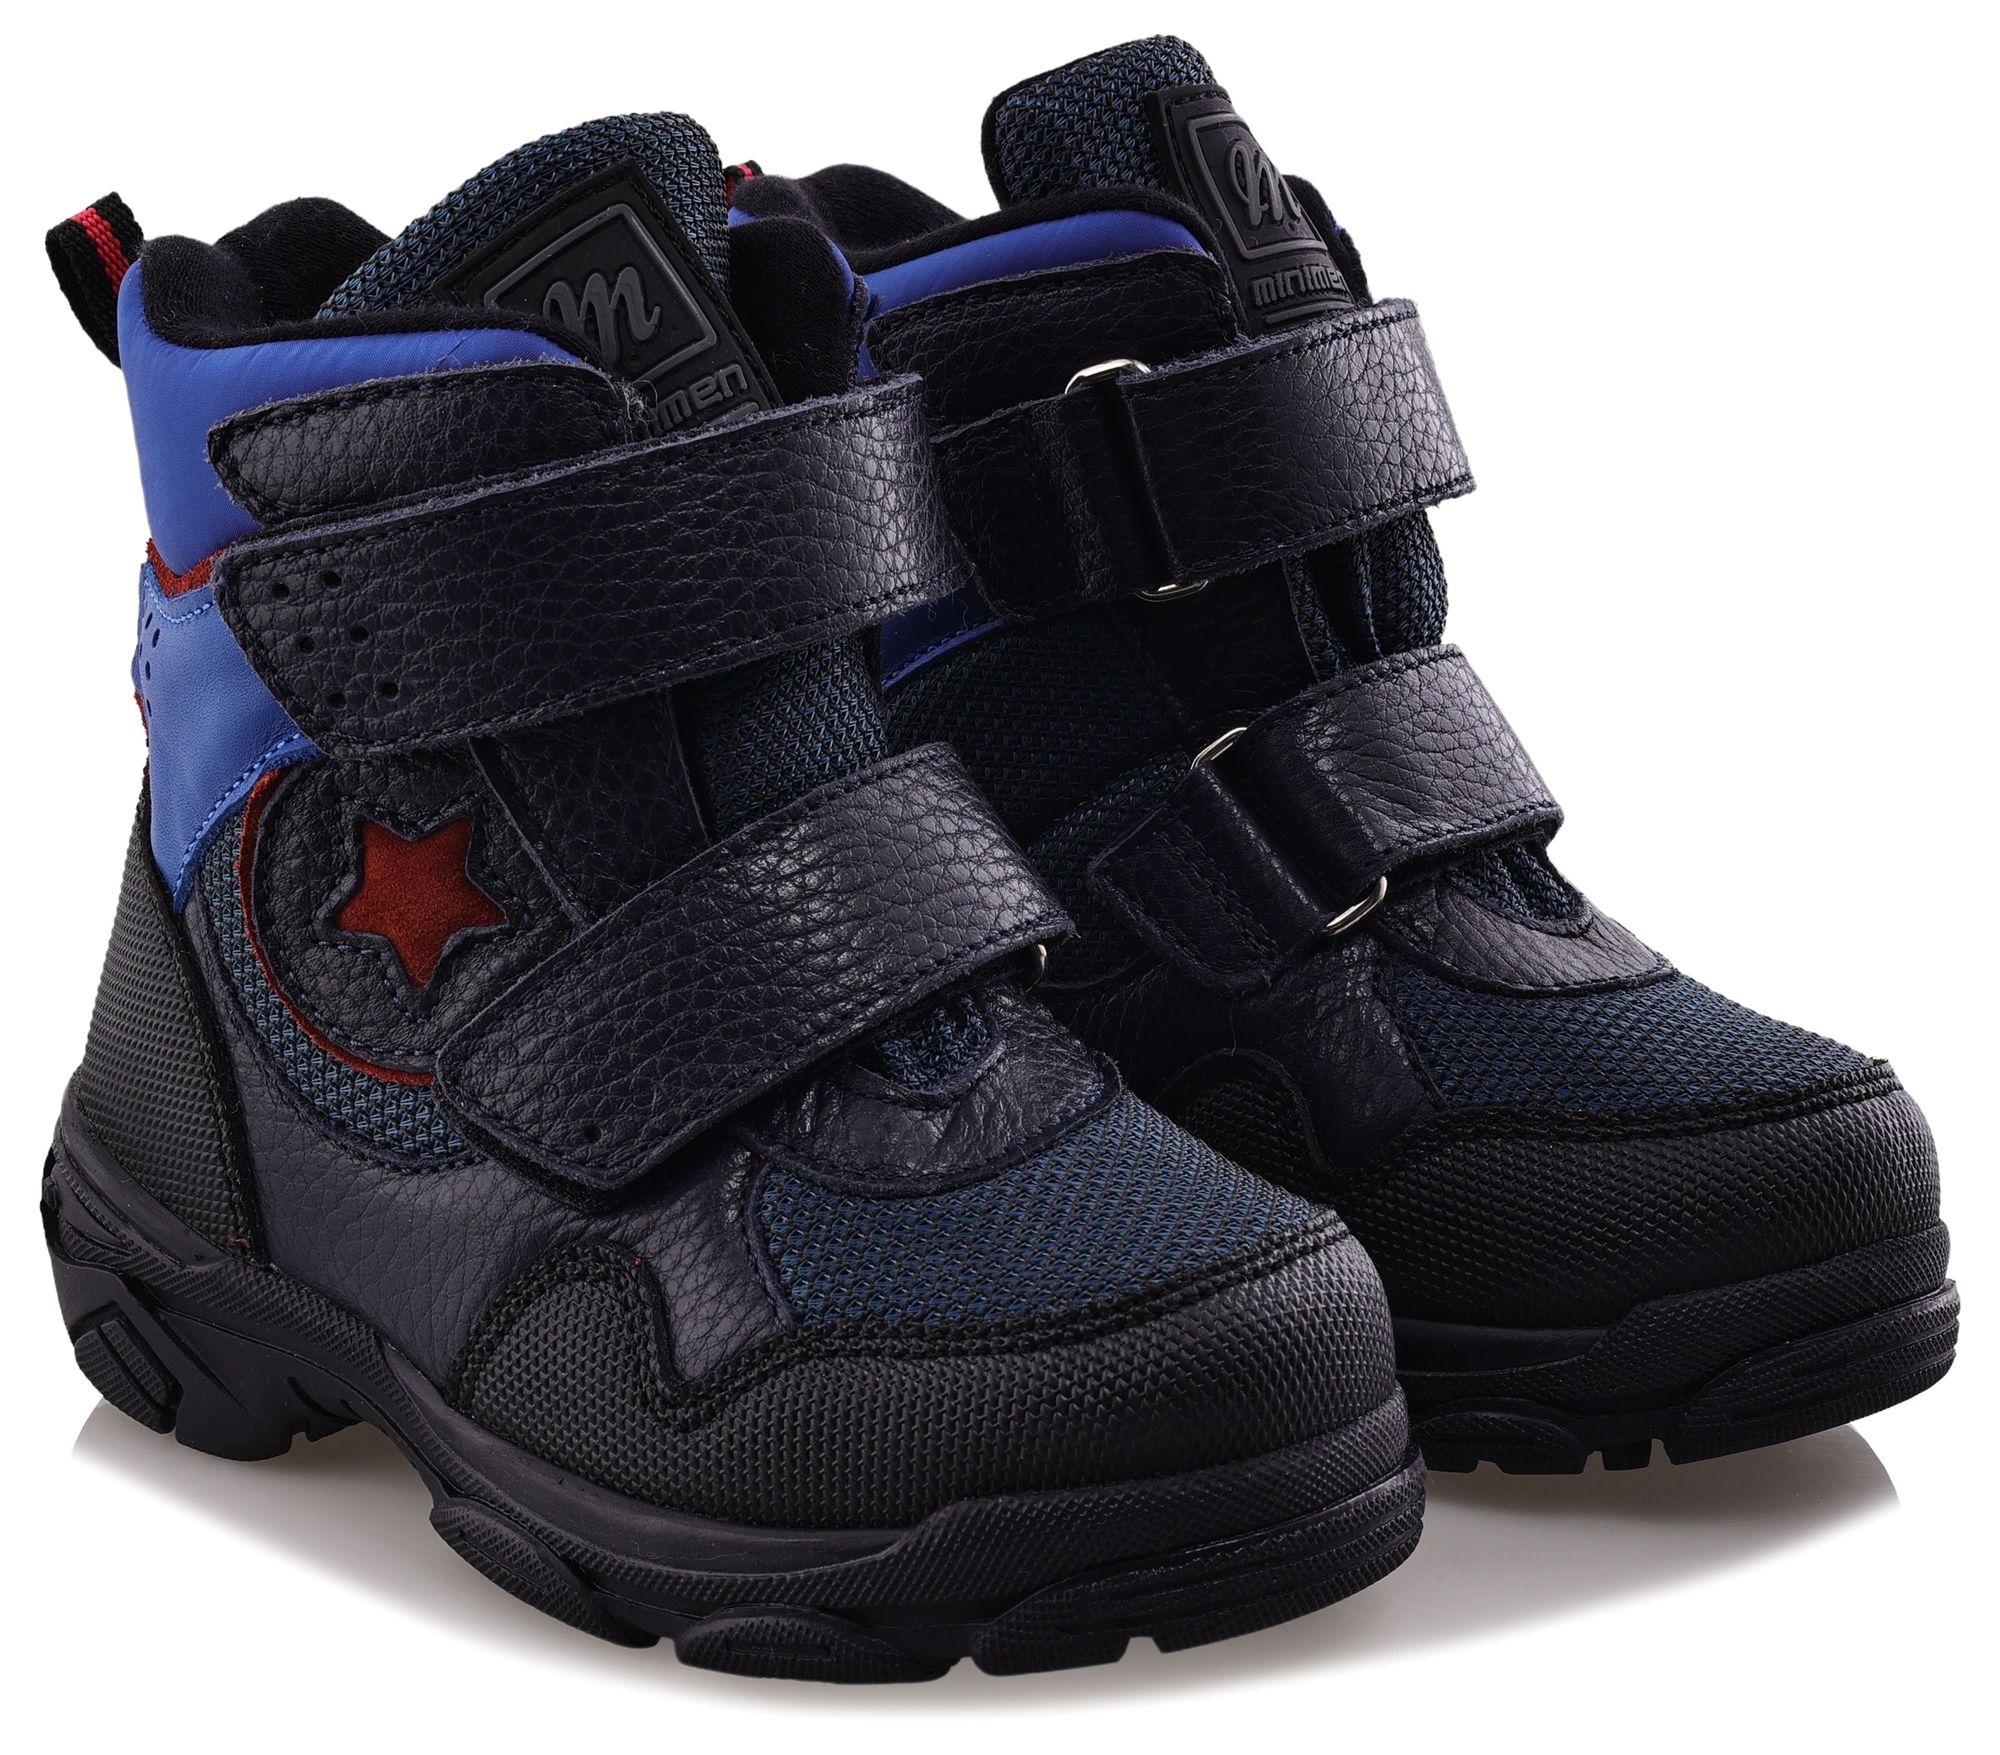 Ботинки Minimen для мальчиков, тёмно-синие, размер 23, 2658-52-23B-01 ботинки minimen для девочек сиреневые размер 29 2658 63 23b 04